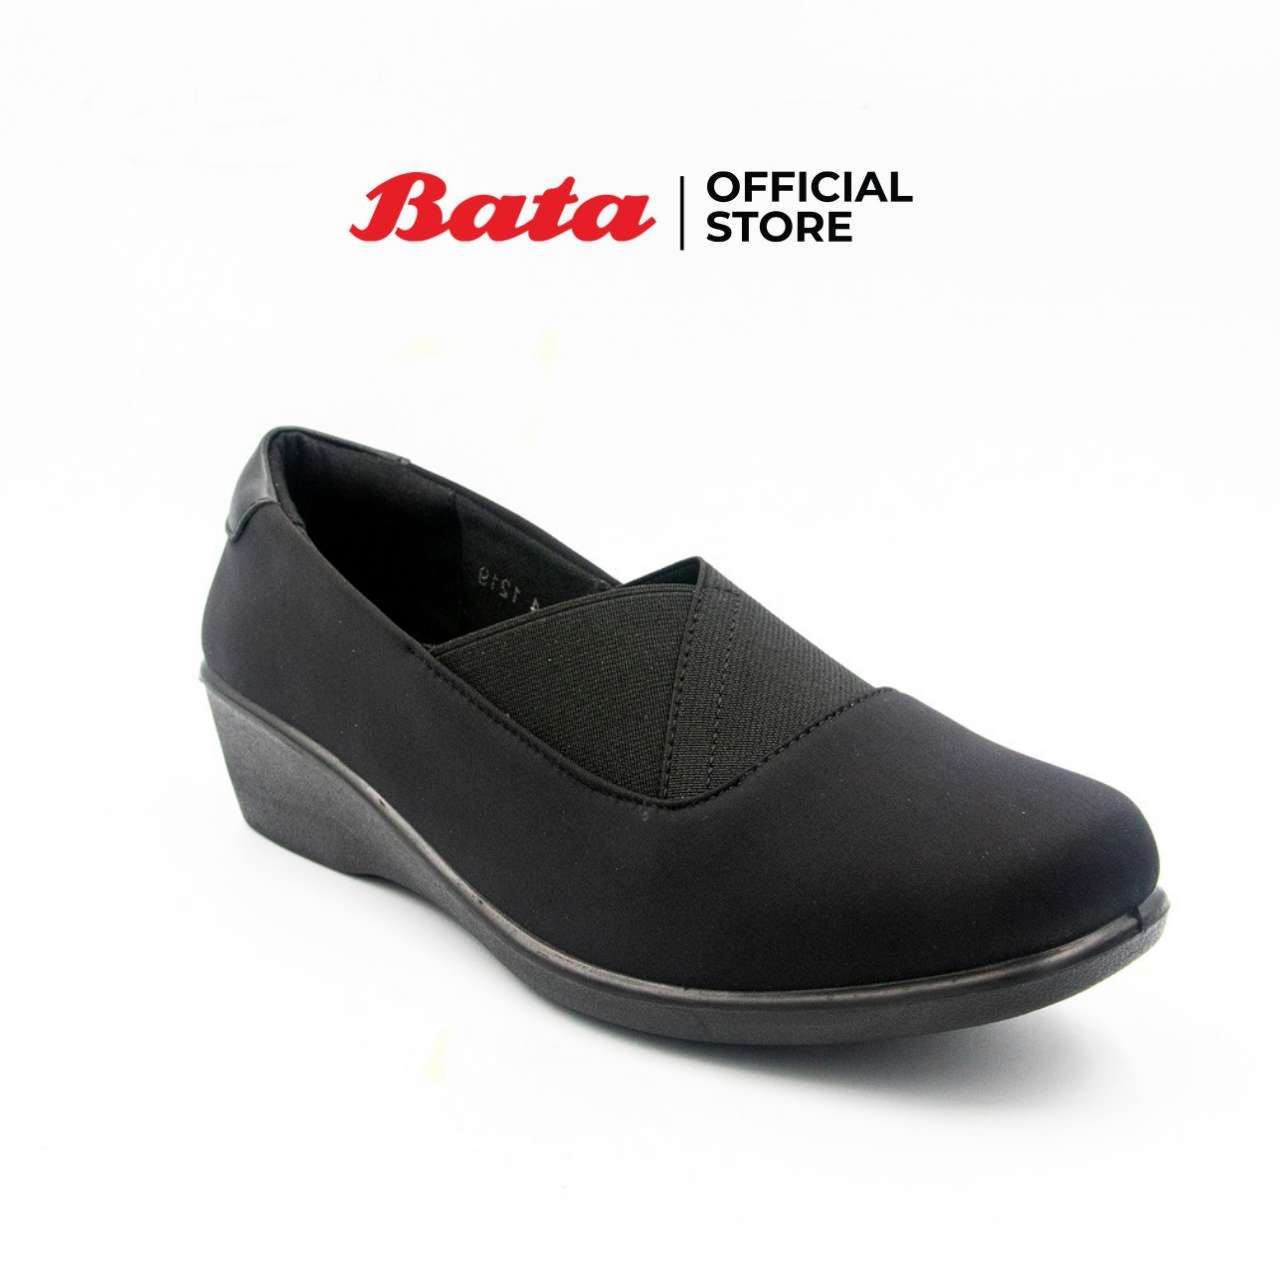 Bata LADIES HEELS Formal รองเท้าลำลอง แบบสวม ปิดส้น สูง 1.5 นิ้ว สีดำ รหัส 6516122 Ladiesheel Fashion